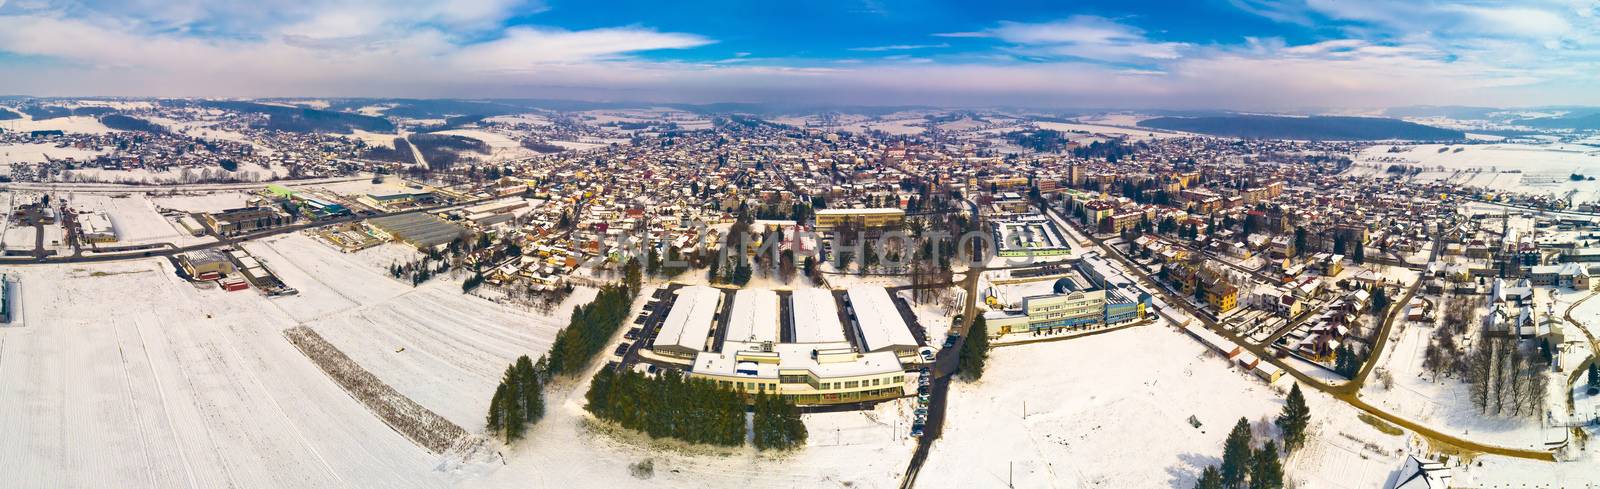 Aerial snowy winter view of Krizevci, town in Prigorje, Croatia